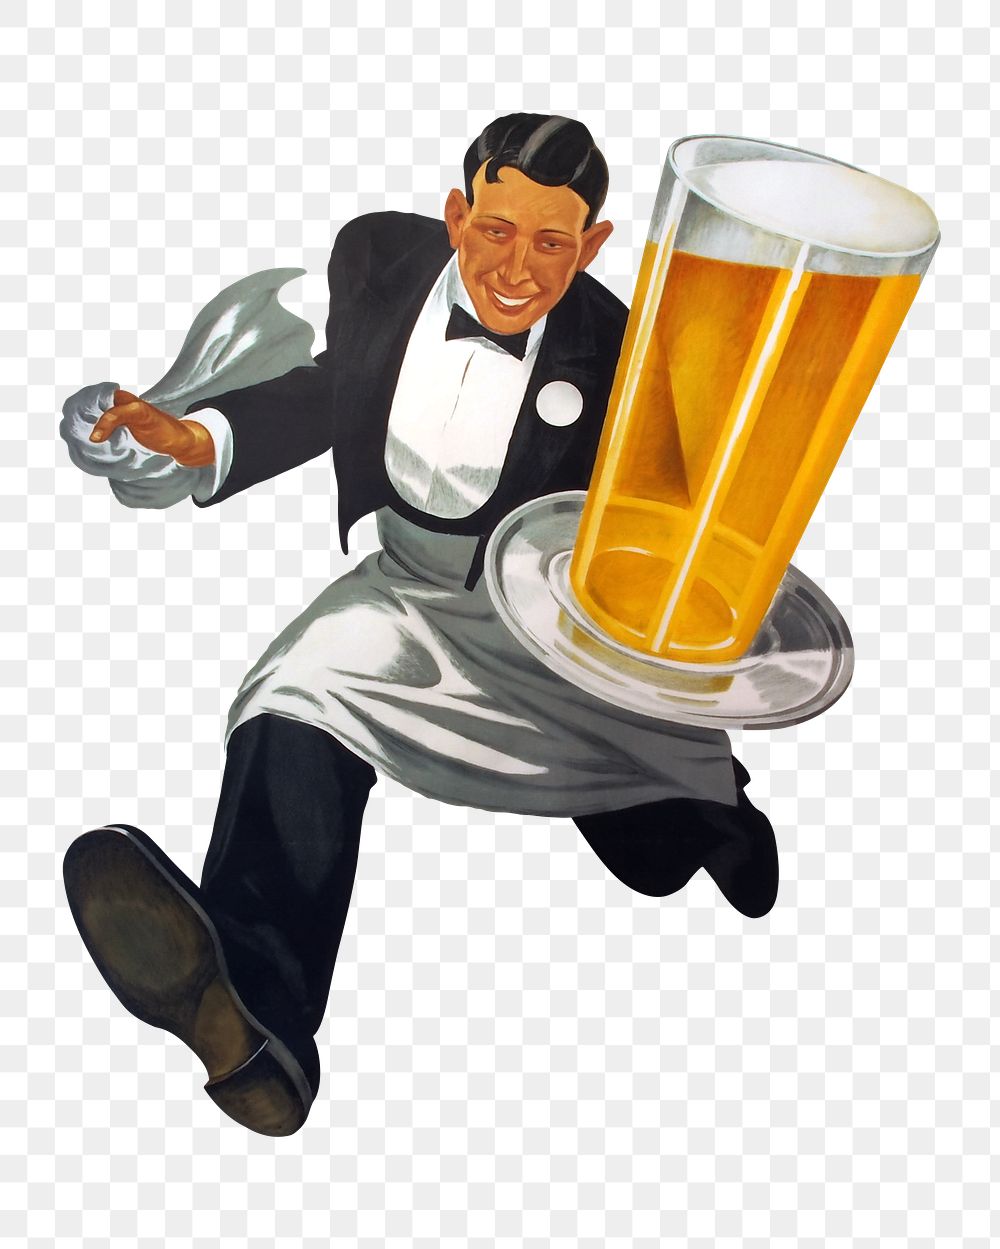 Vintage man png serving beer illustration, transparent background. Remixed by rawpixel. 